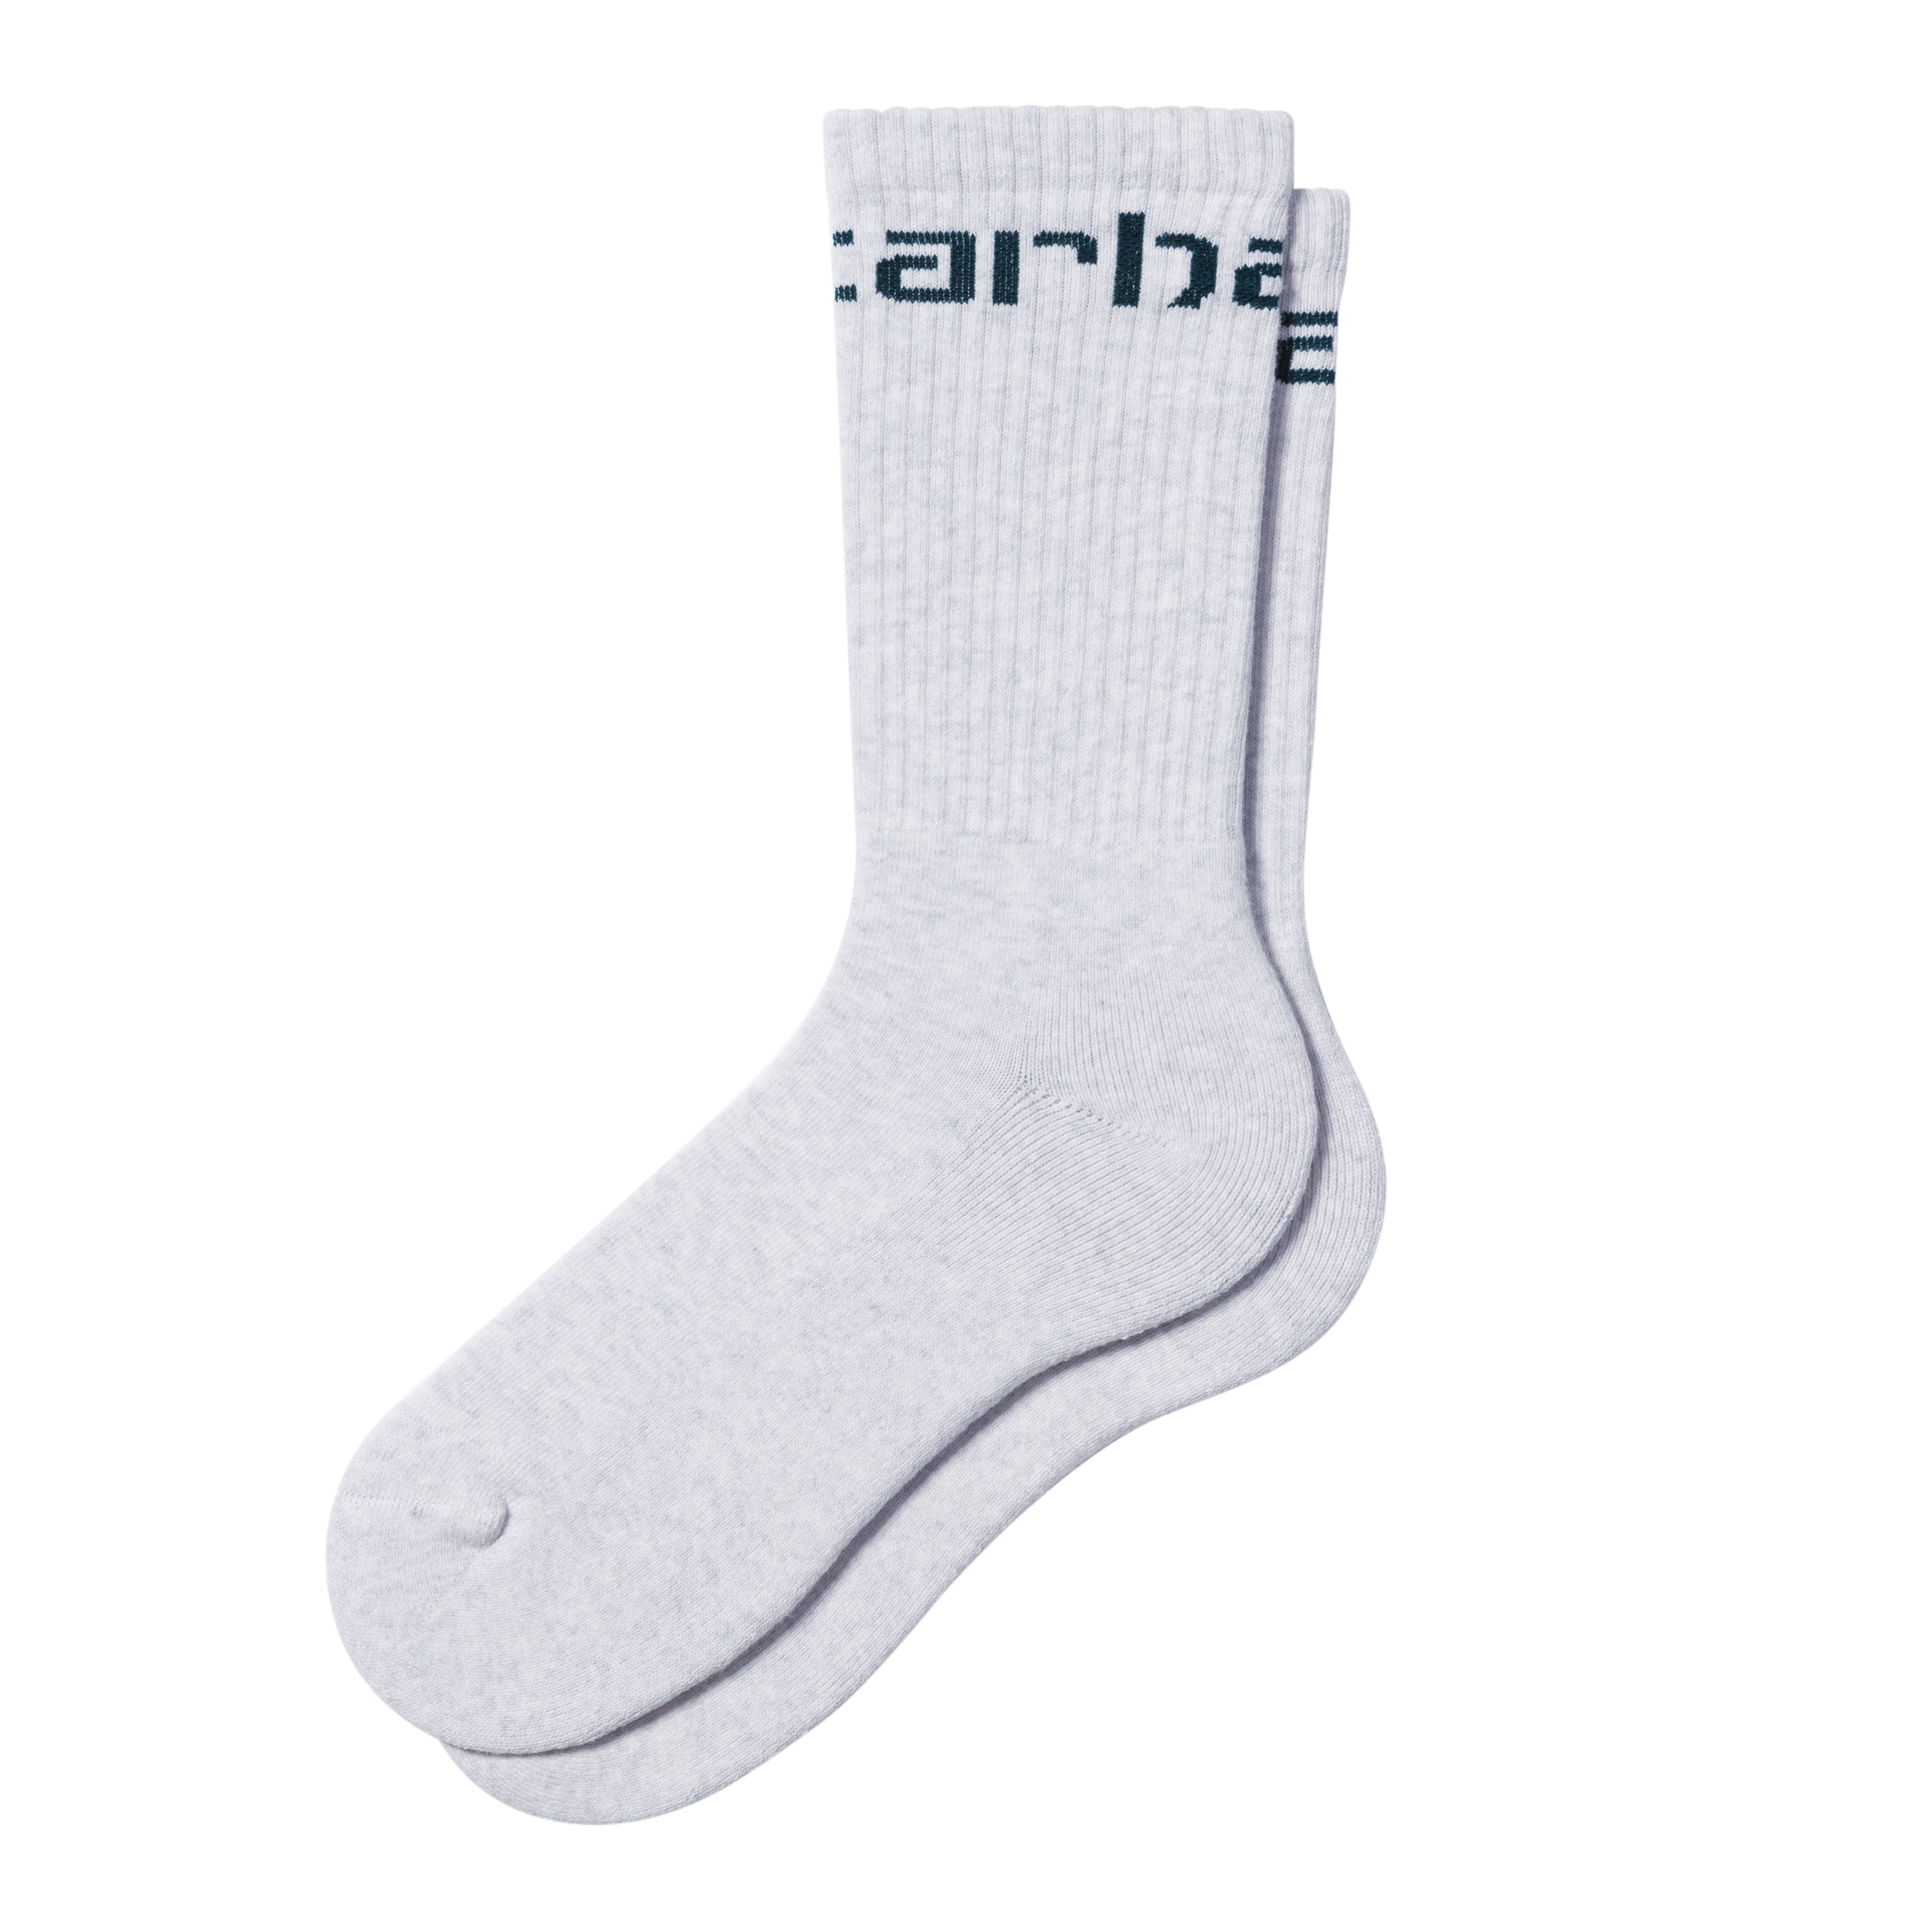 Carhartt WIP Carhartt Socks in Grau